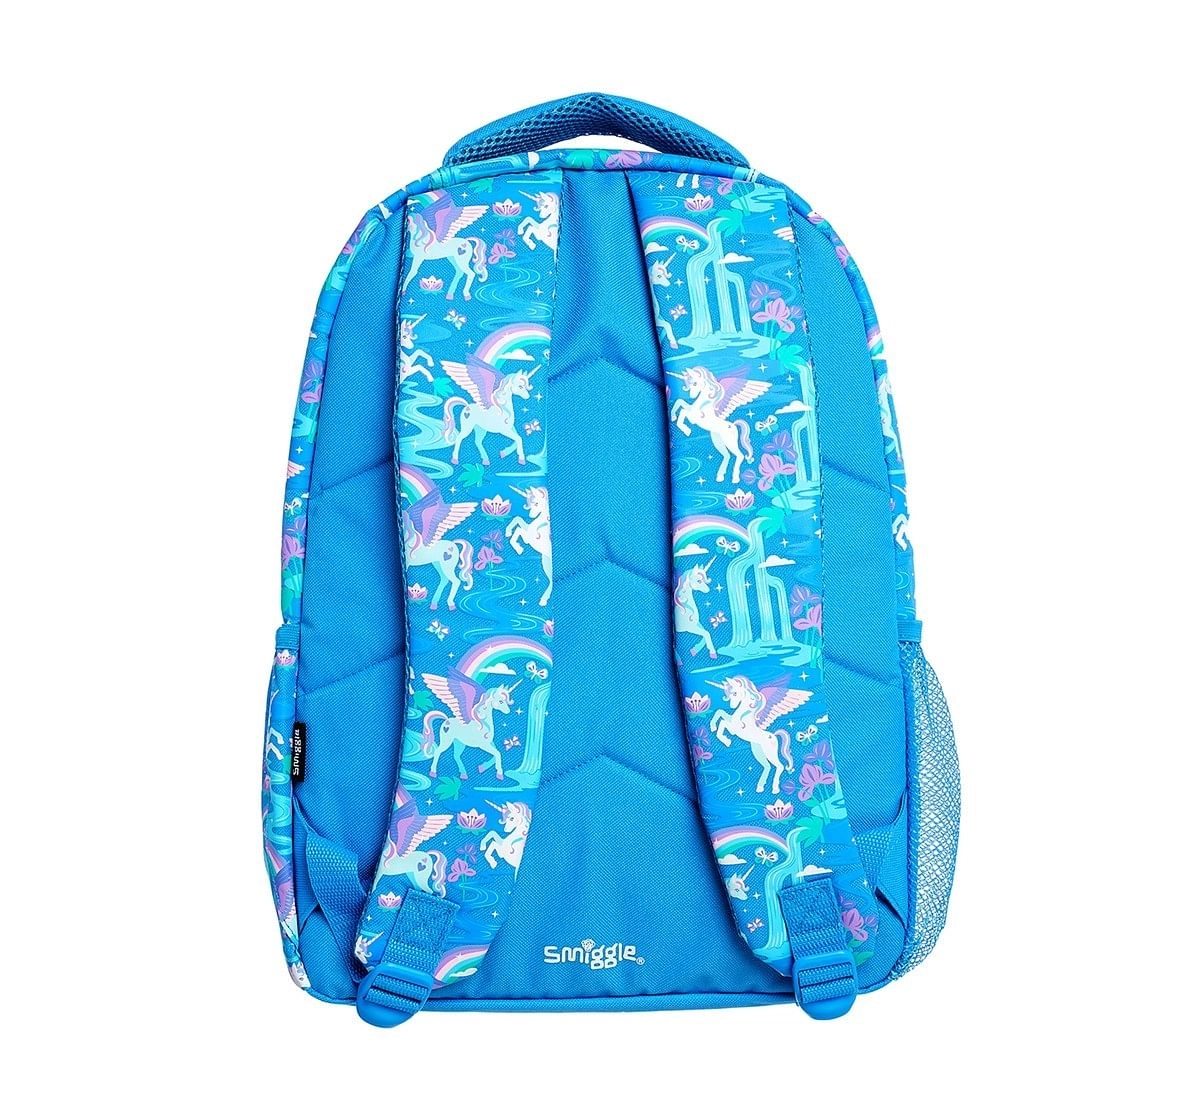 Smiggle Far Away Backpack - Unicorn Print Bags for Kids age 3Y+ (Cornflower Blue)